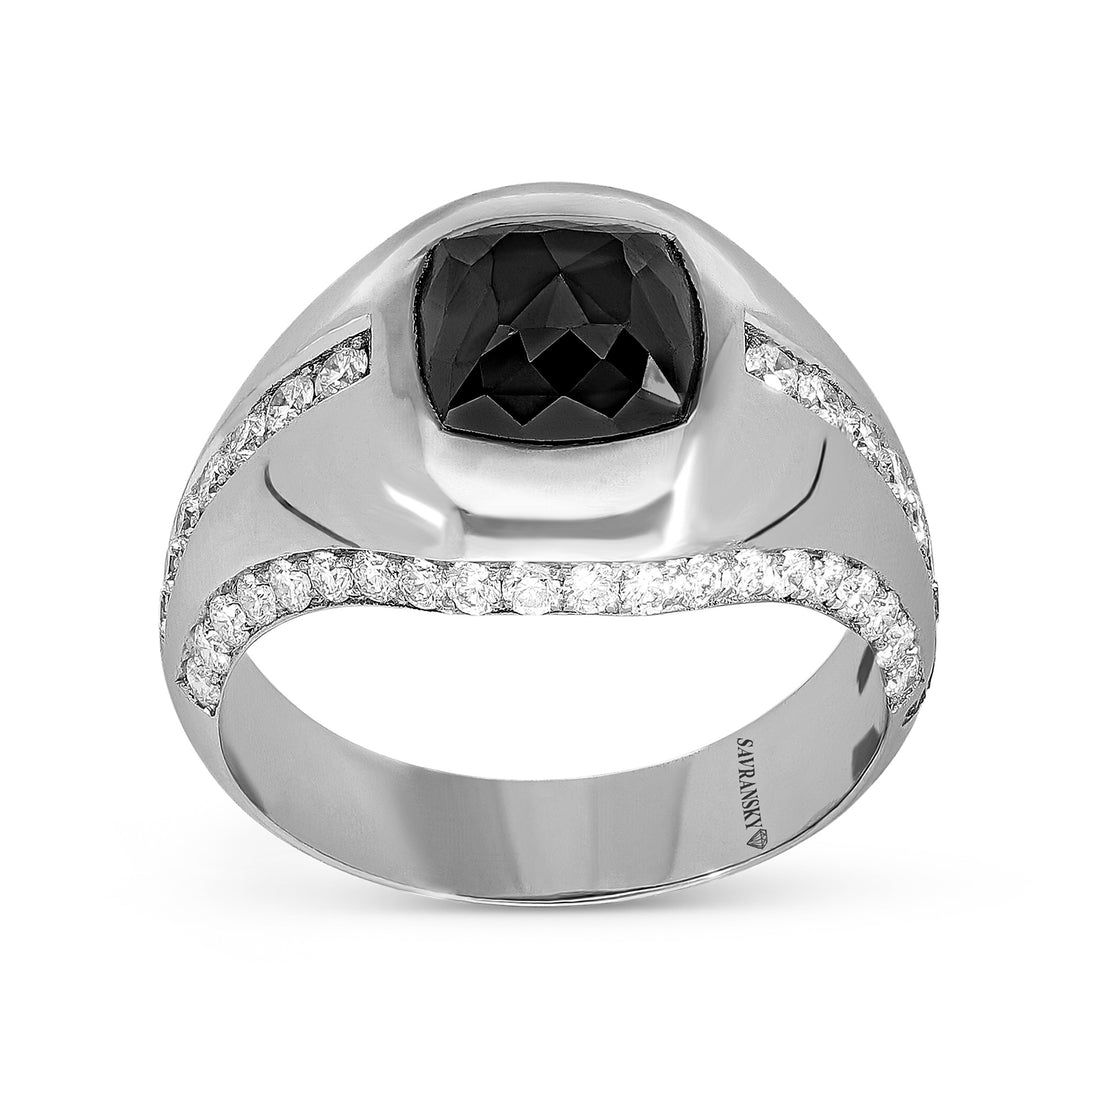 Black Diamond Engagement Ring - 5.29 Carat